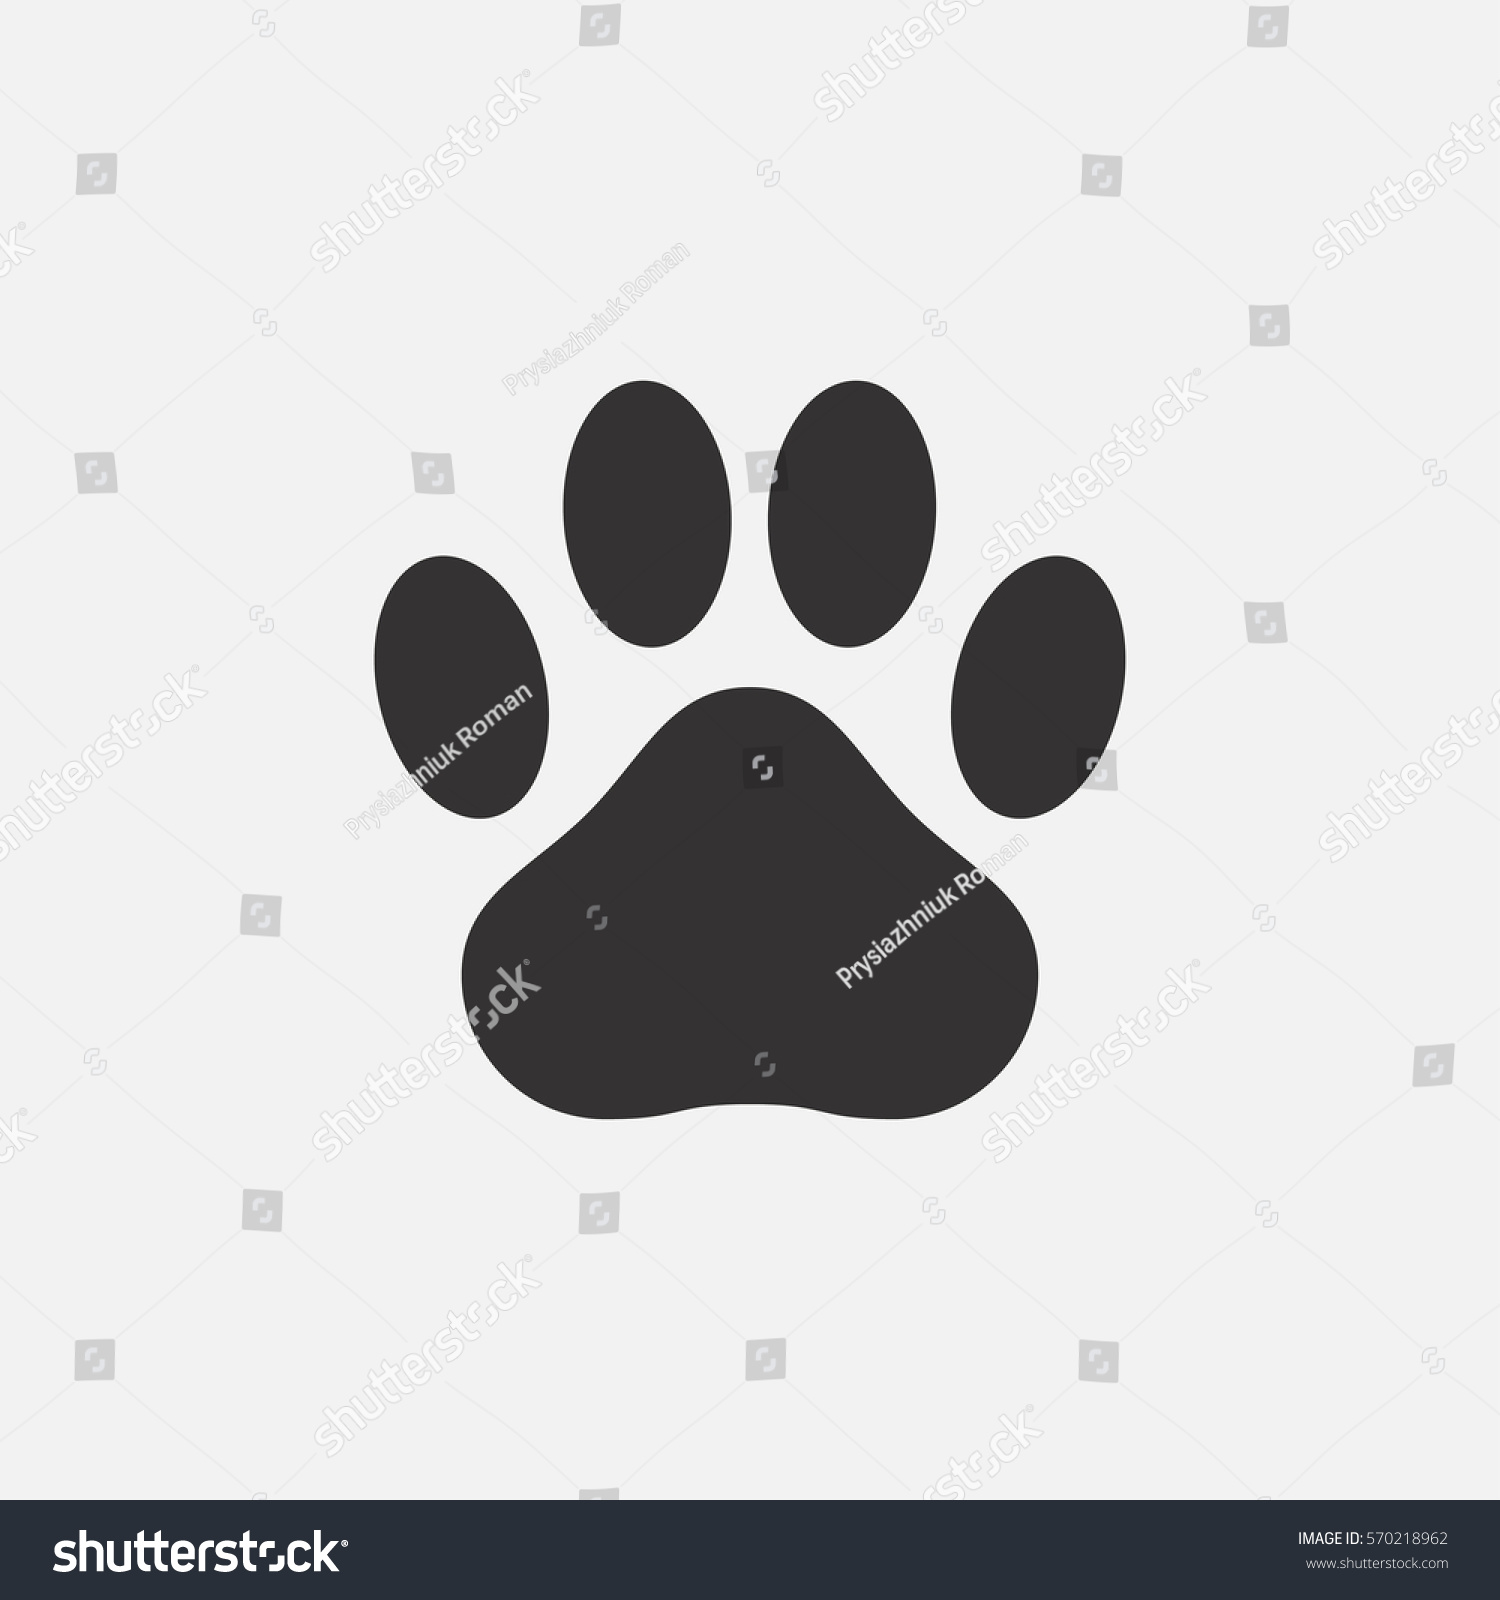 Pawプリントアイコン 動物の足跡 猫 犬 熊 ベクターイラスト のベクター画像素材 ロイヤリティフリー Shutterstock